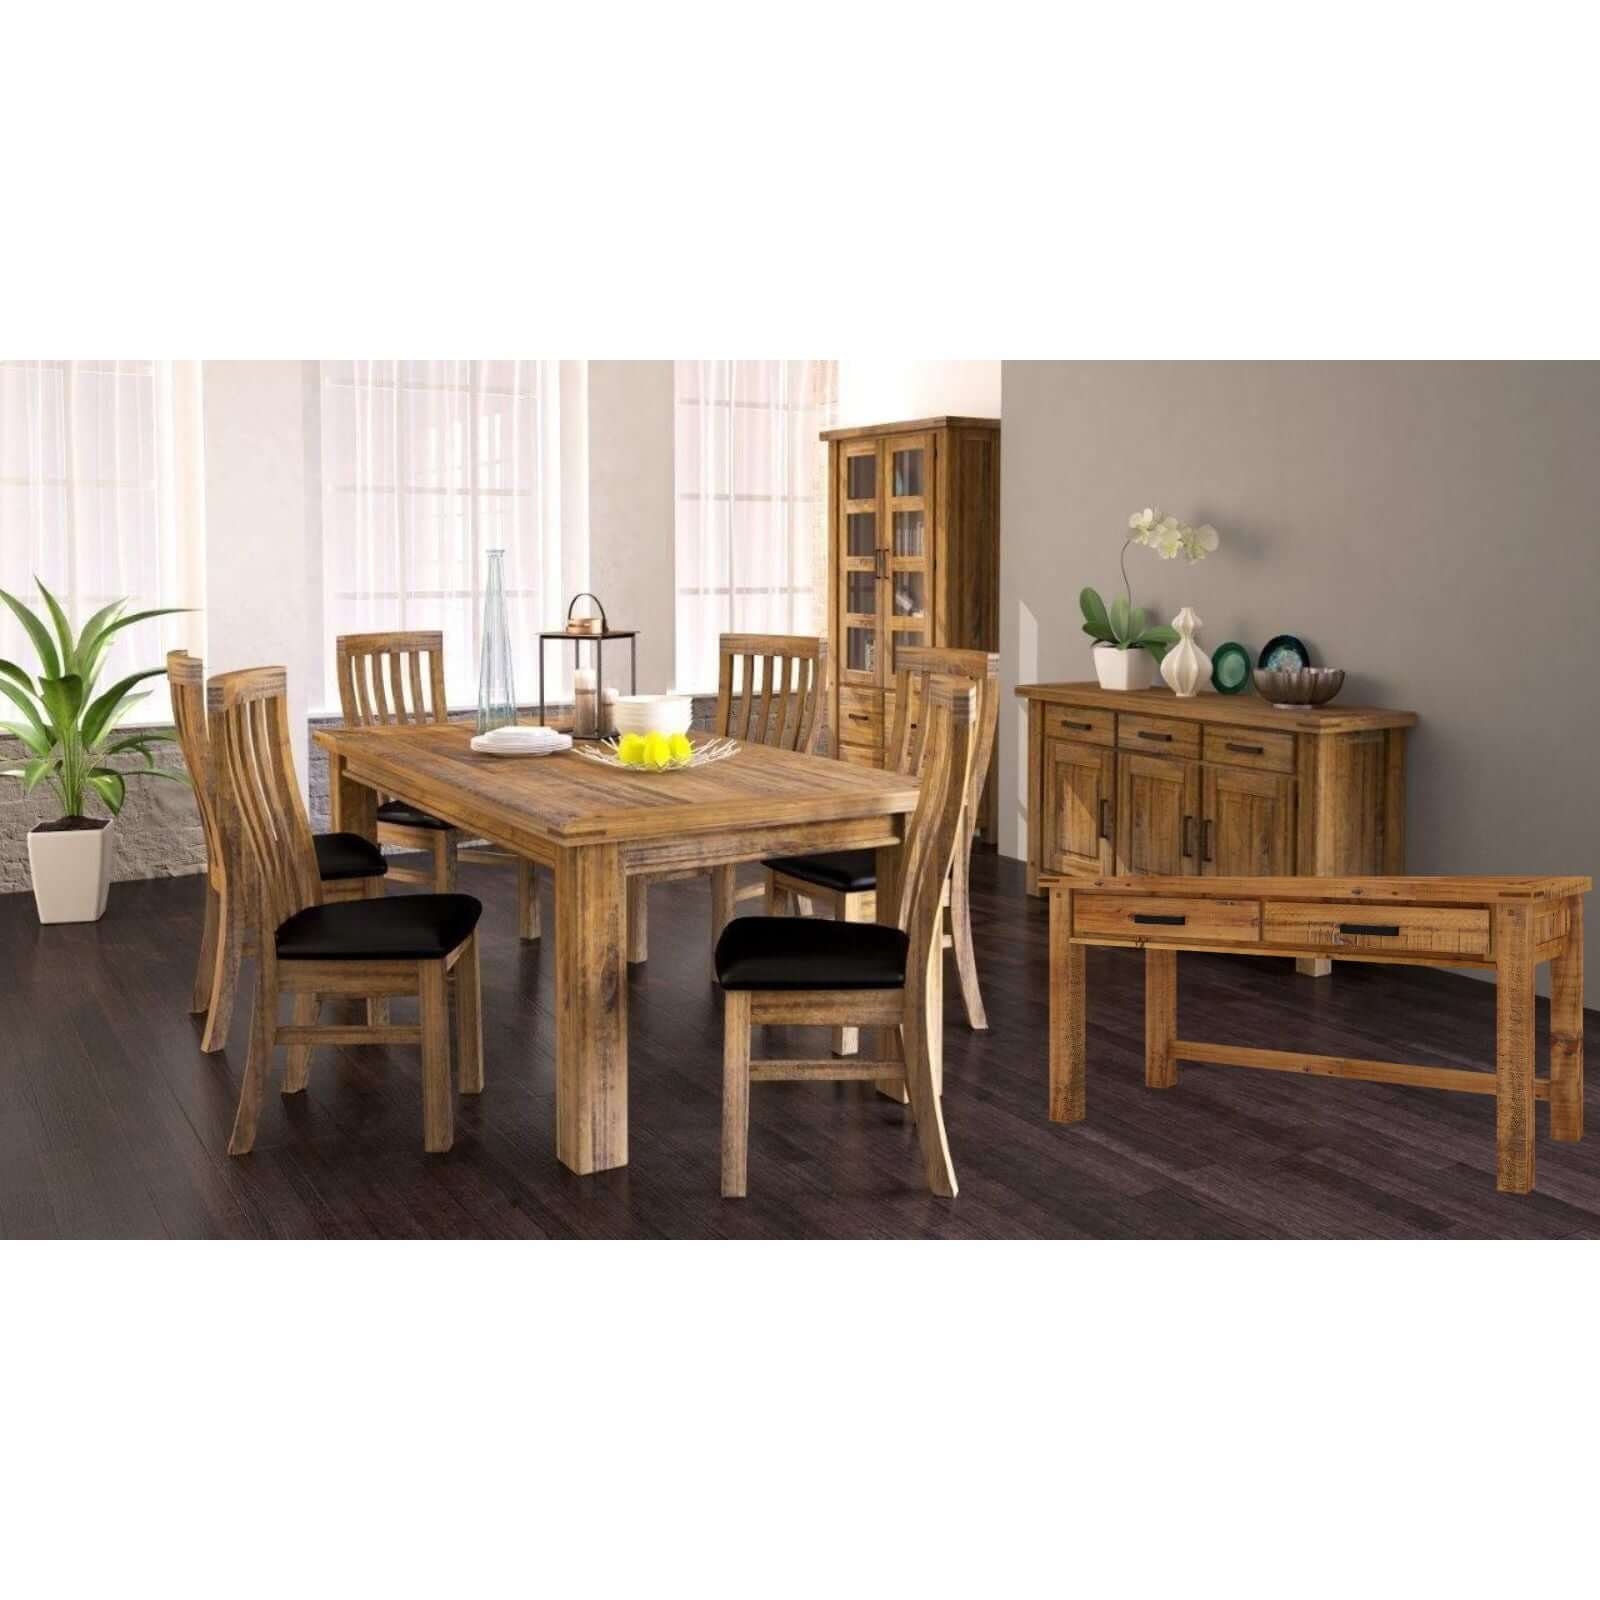 Teasel Study Desk - Solid Pine Office Table in Oak-Upinteriors